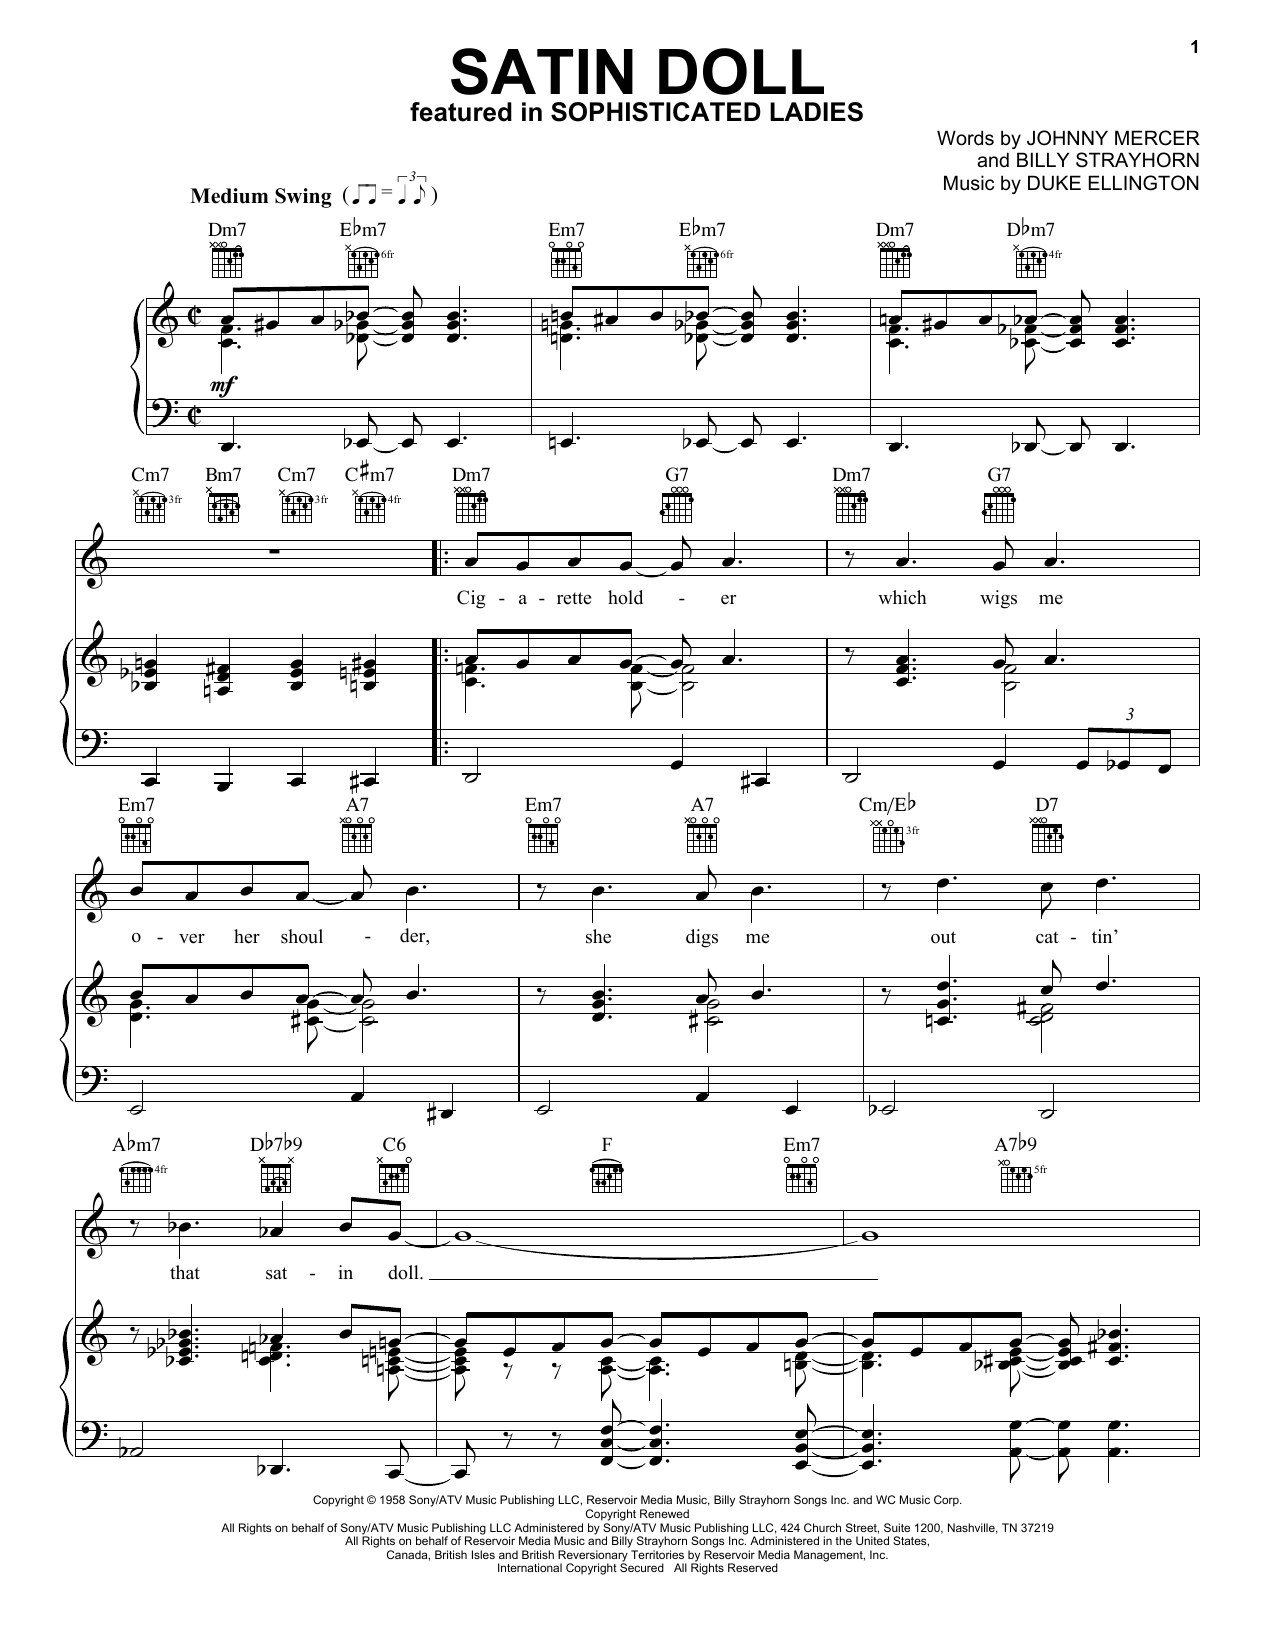 Duke Ellington Satin Doll Sheet Music Notes & Chords for Beginner Piano - Download or Print PDF